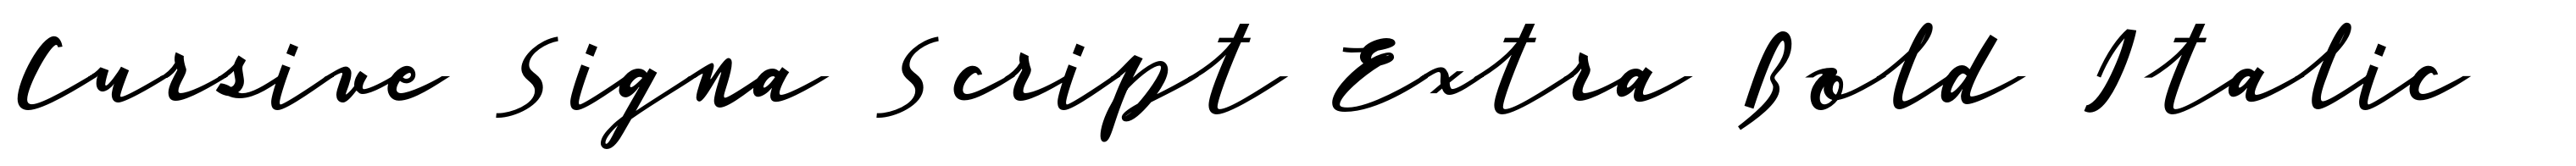 Cursive Signa Script Extra Bold Italic